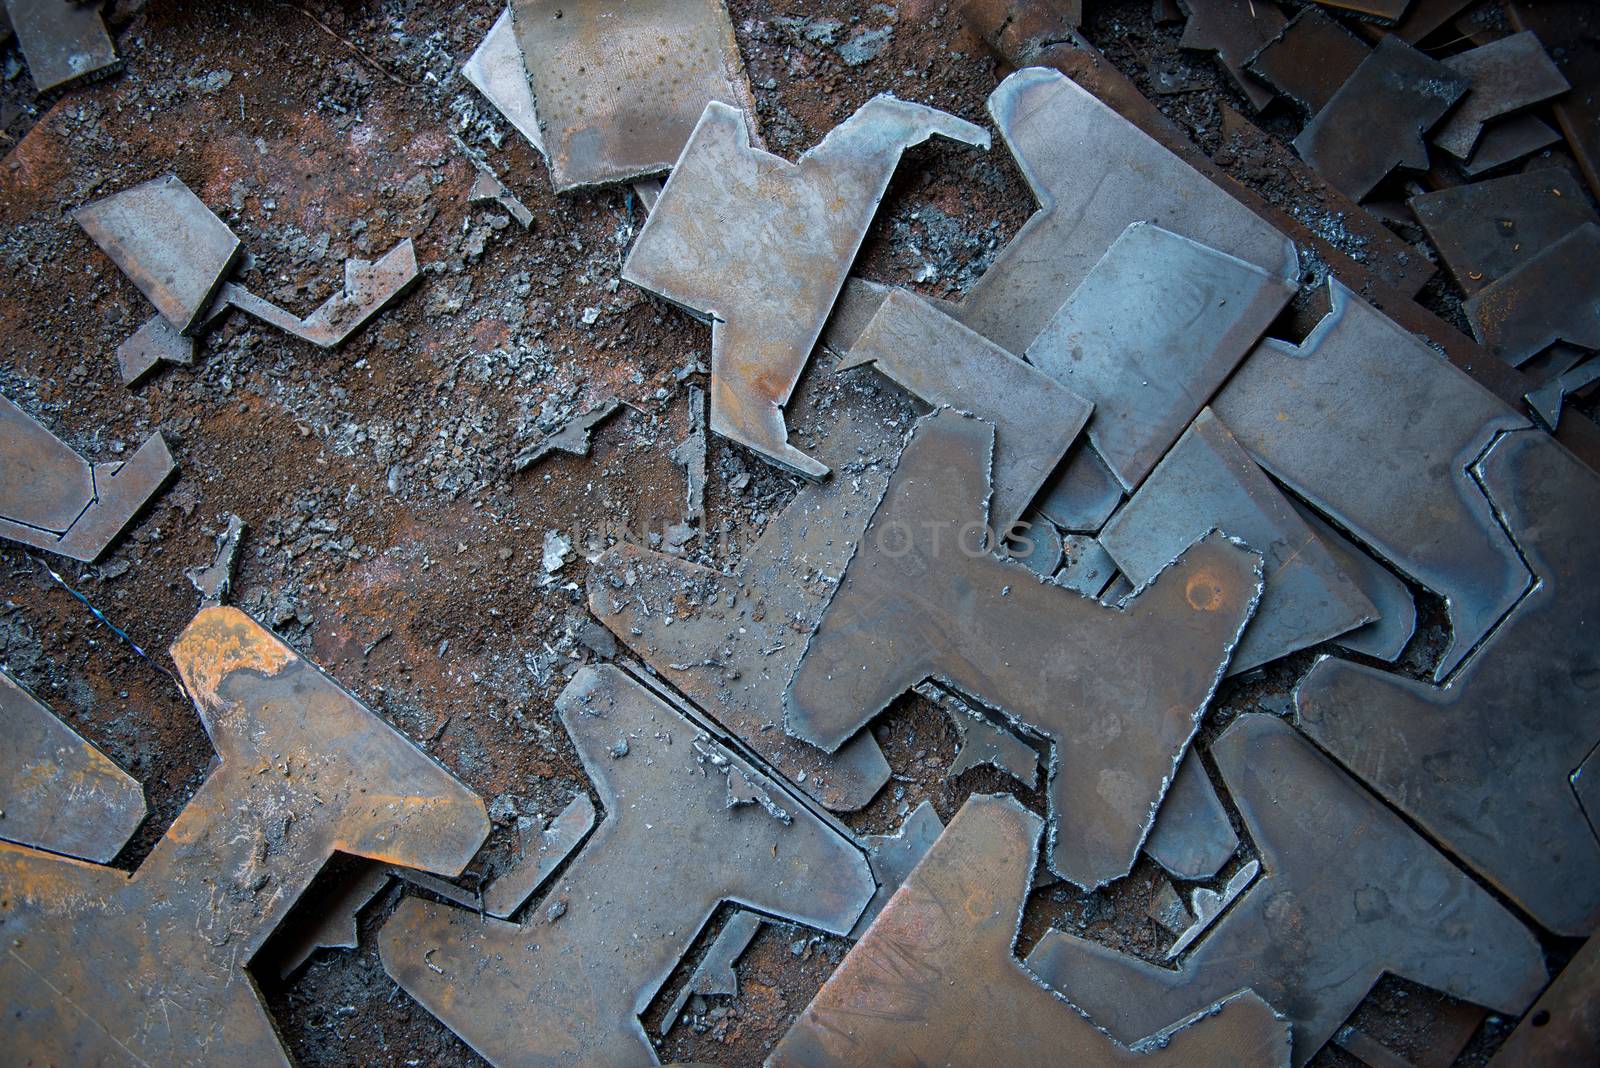 scrap metal on the floor by antpkr